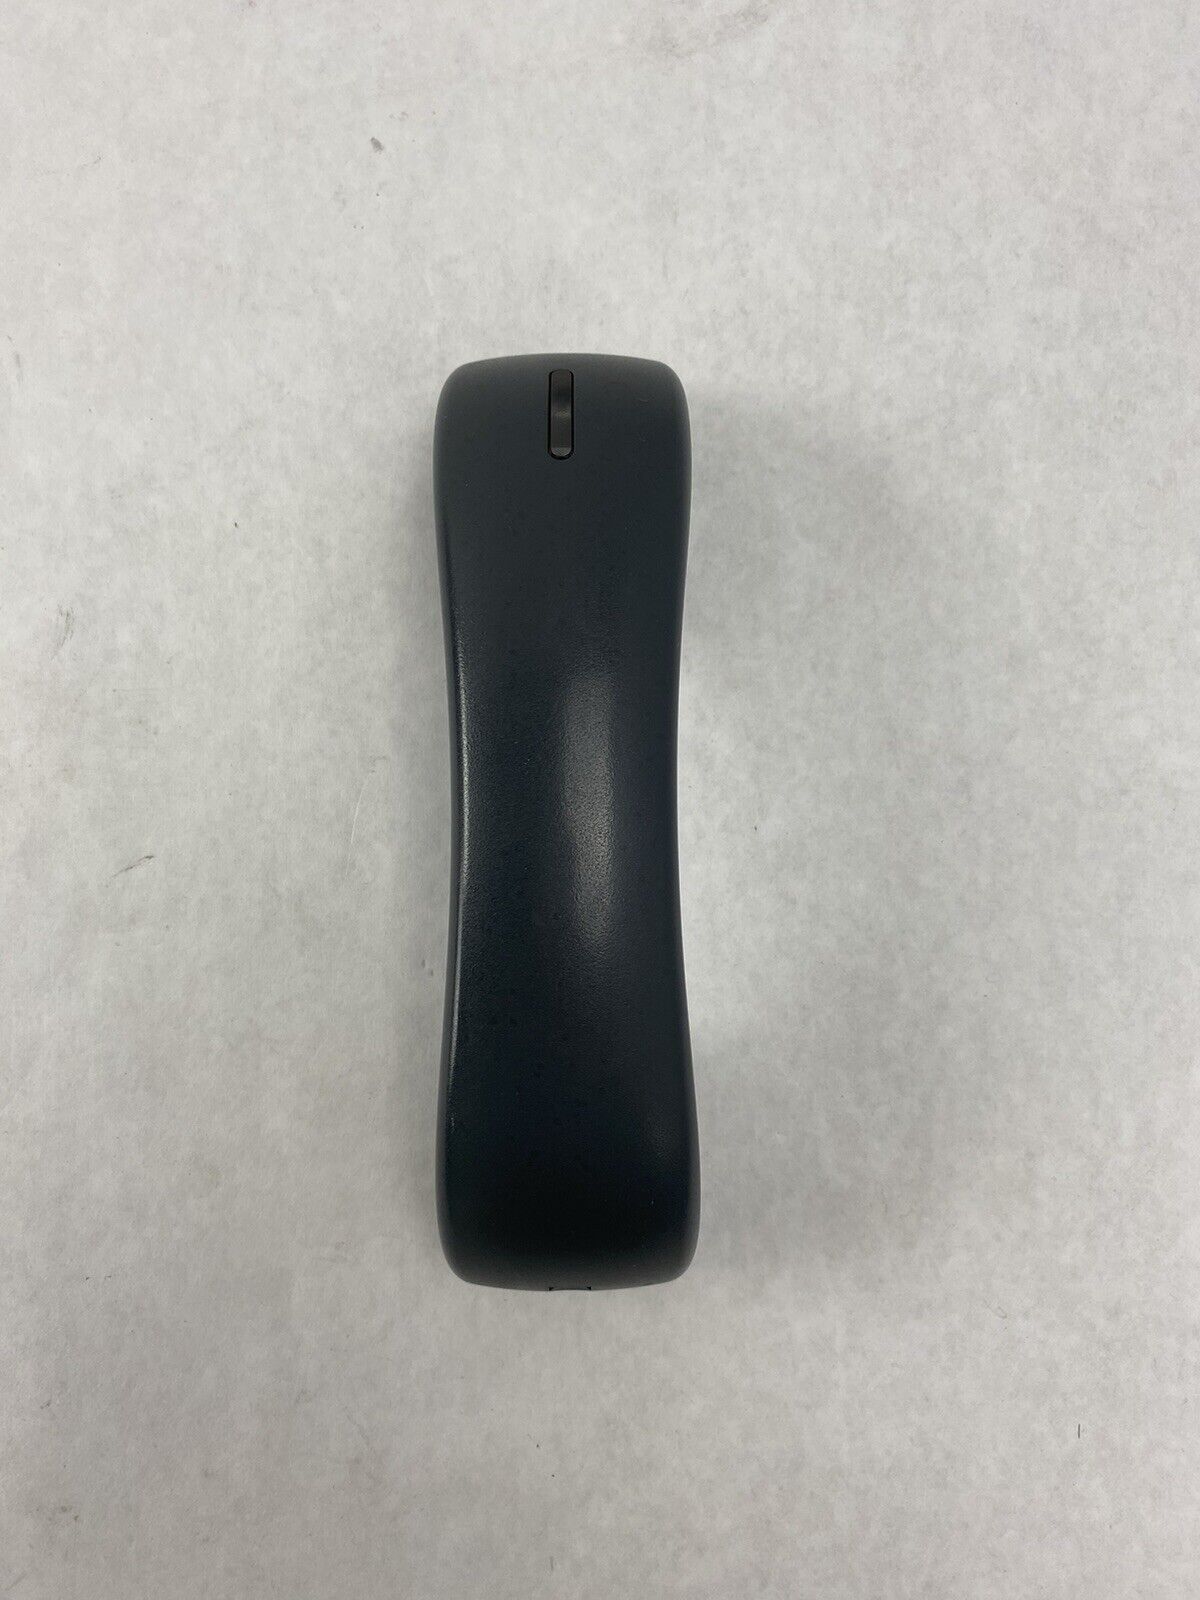 Cisco 7900 Series Phone Replacement Handset